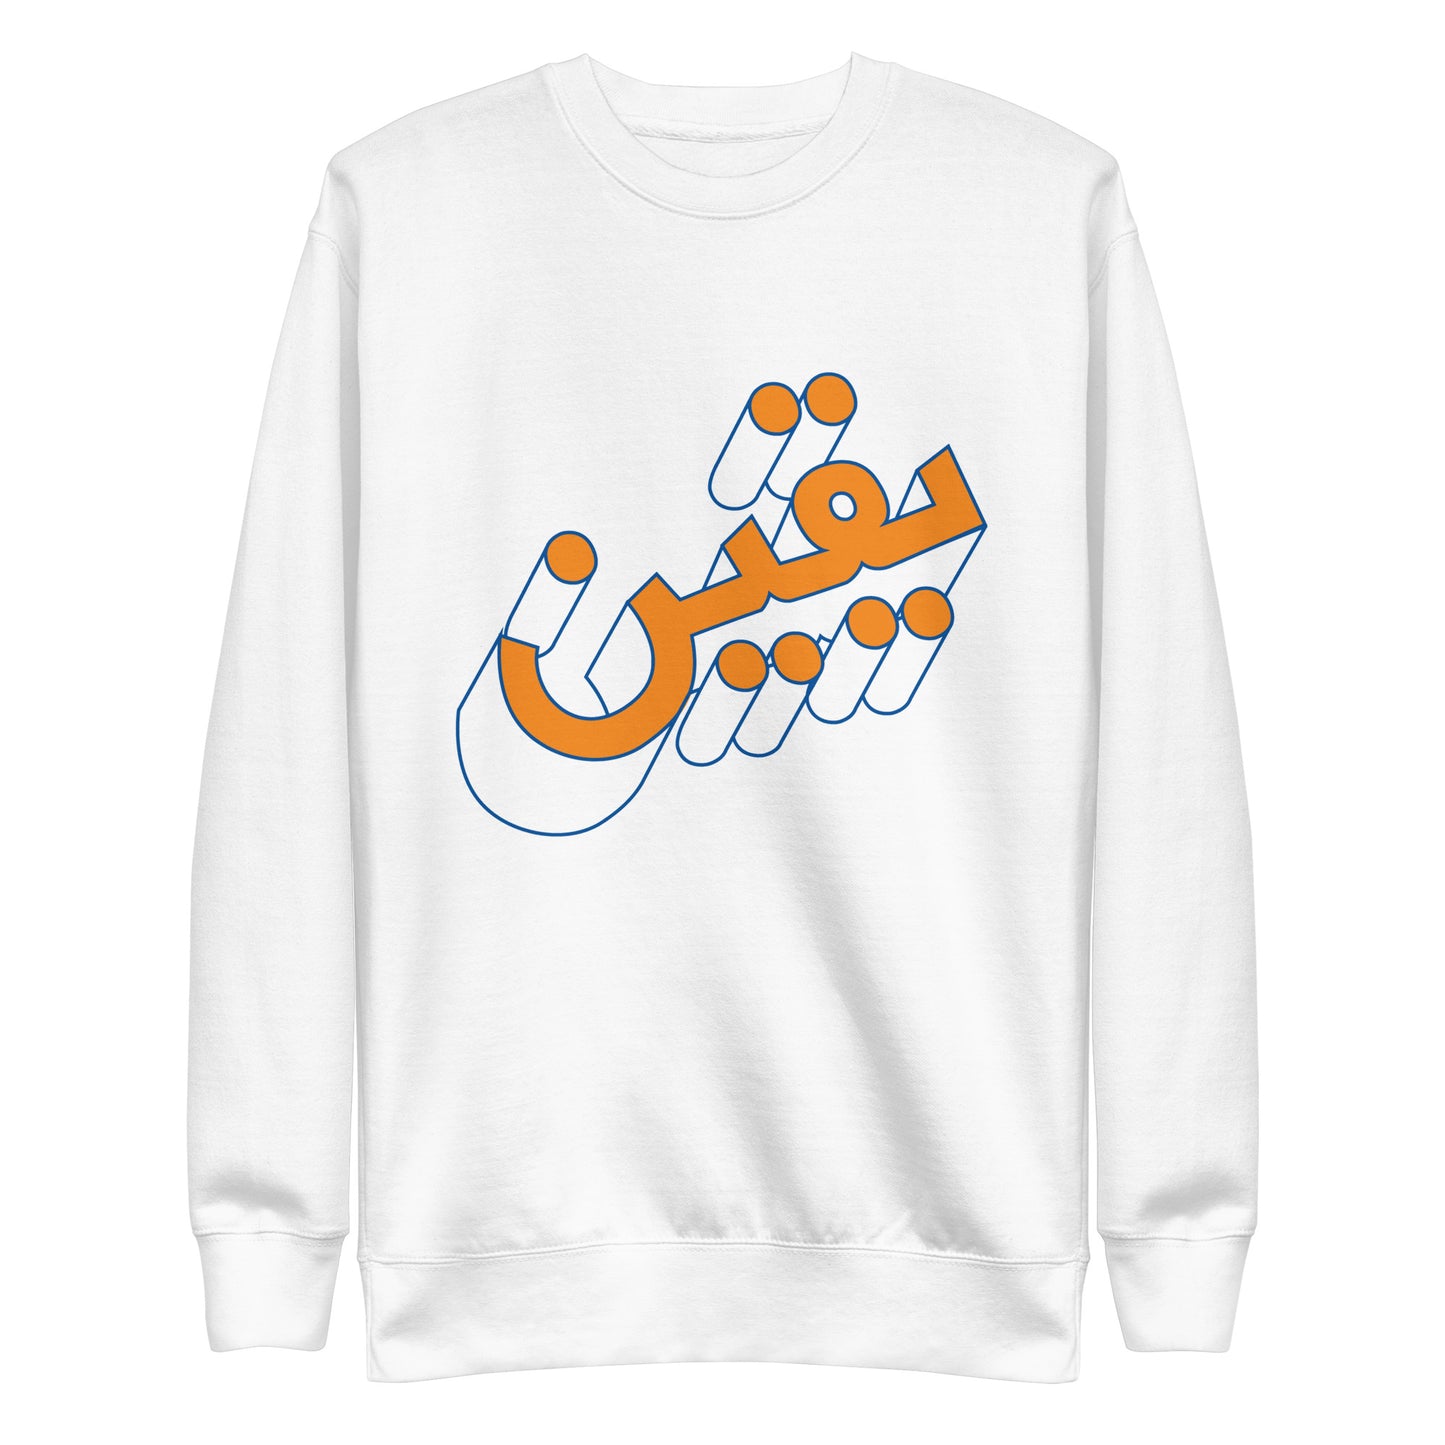 Arabic Script Sweatshirt - Limited Edition in White - Front